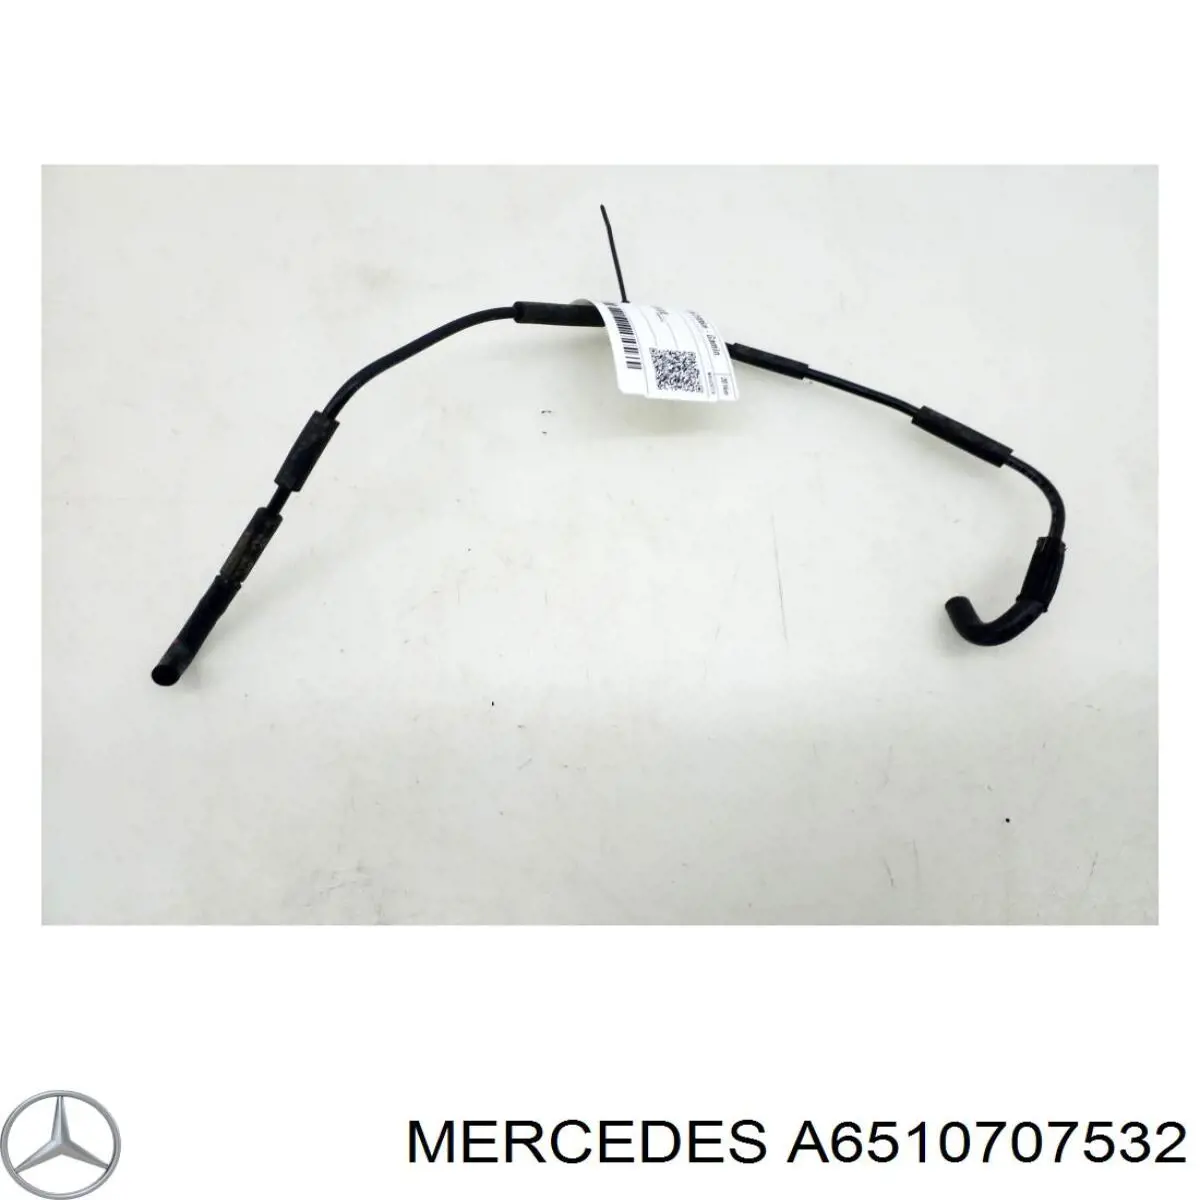 6510707532 Mercedes 